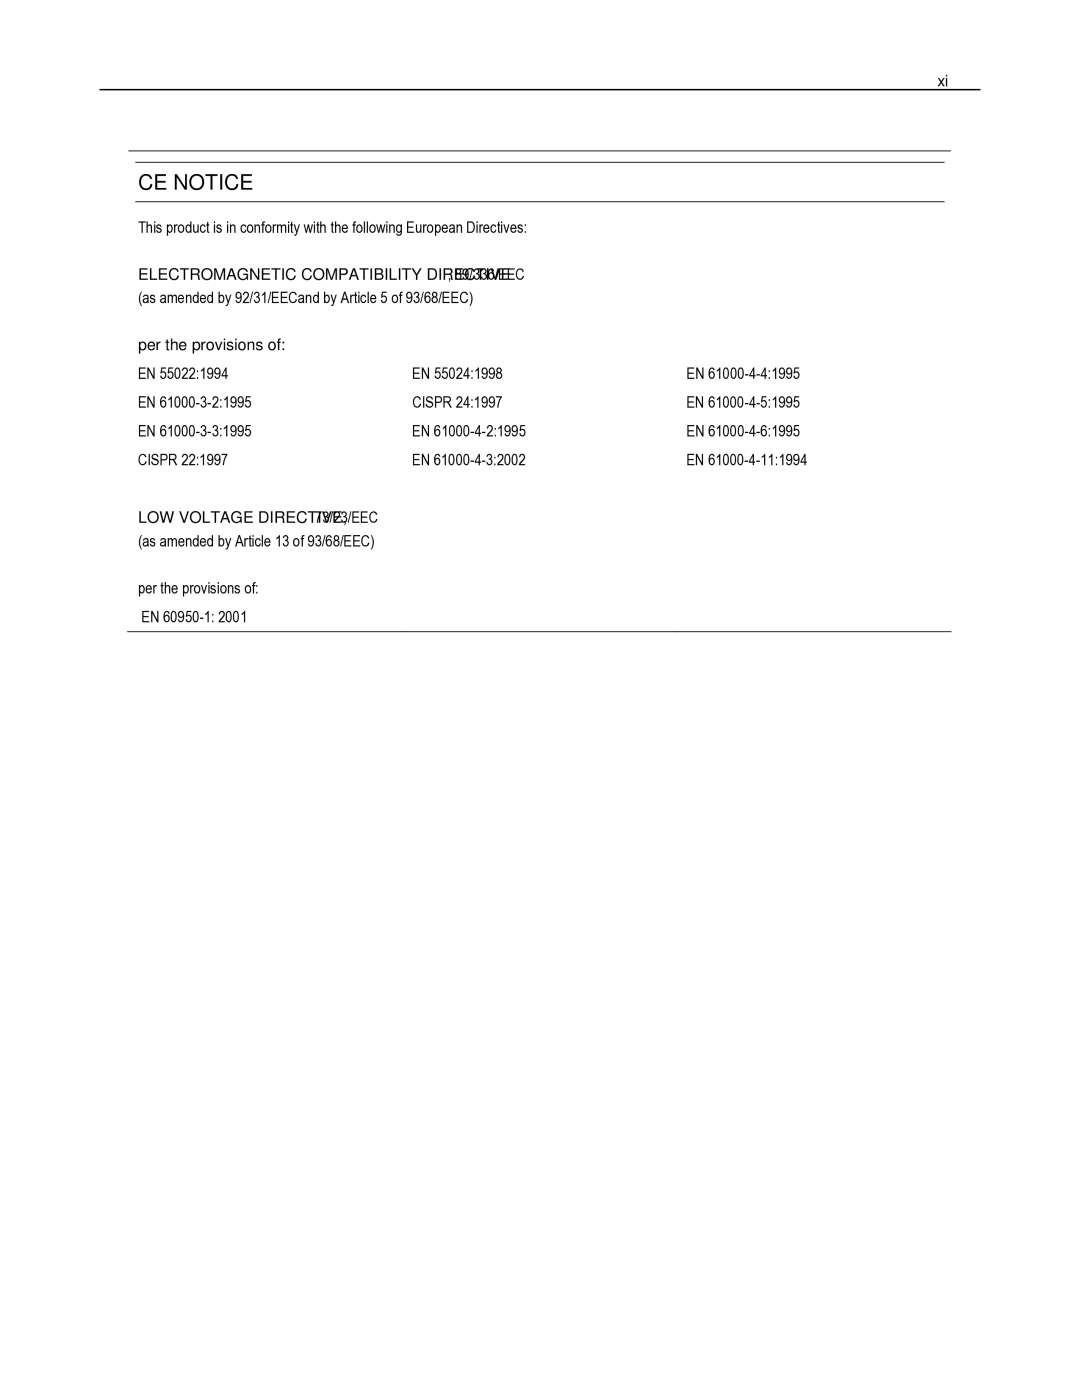 Toshiba HVR16-X, HVR32-X, HVR8-X user manual CE Notice 